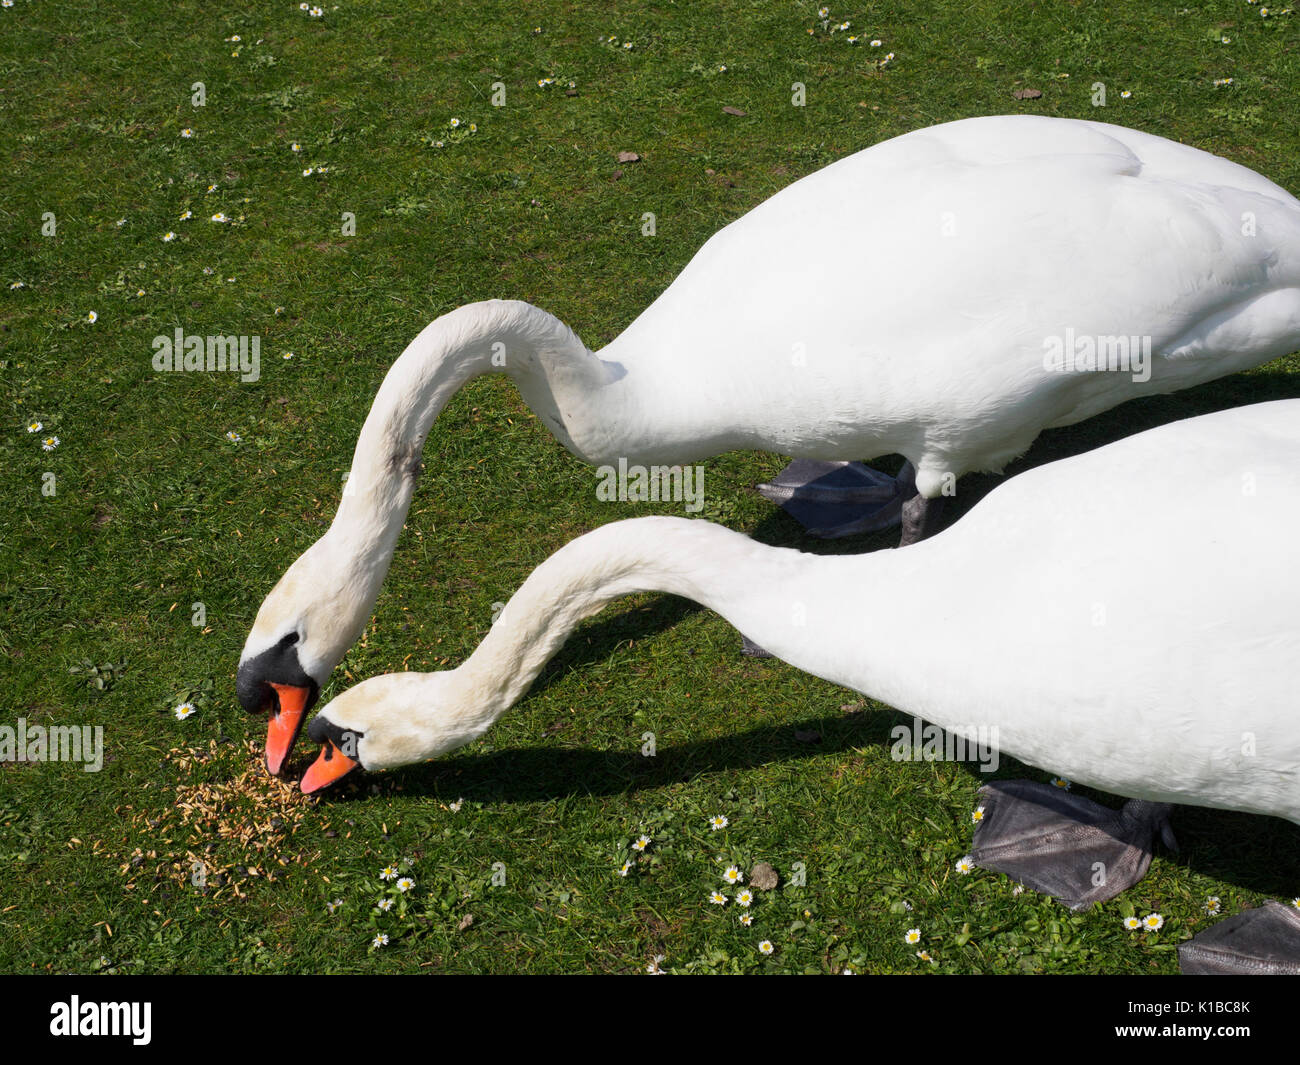 England, Nottinghamshire - Clumber Park, National Trust large estate open to public. Swans. Stock Photo